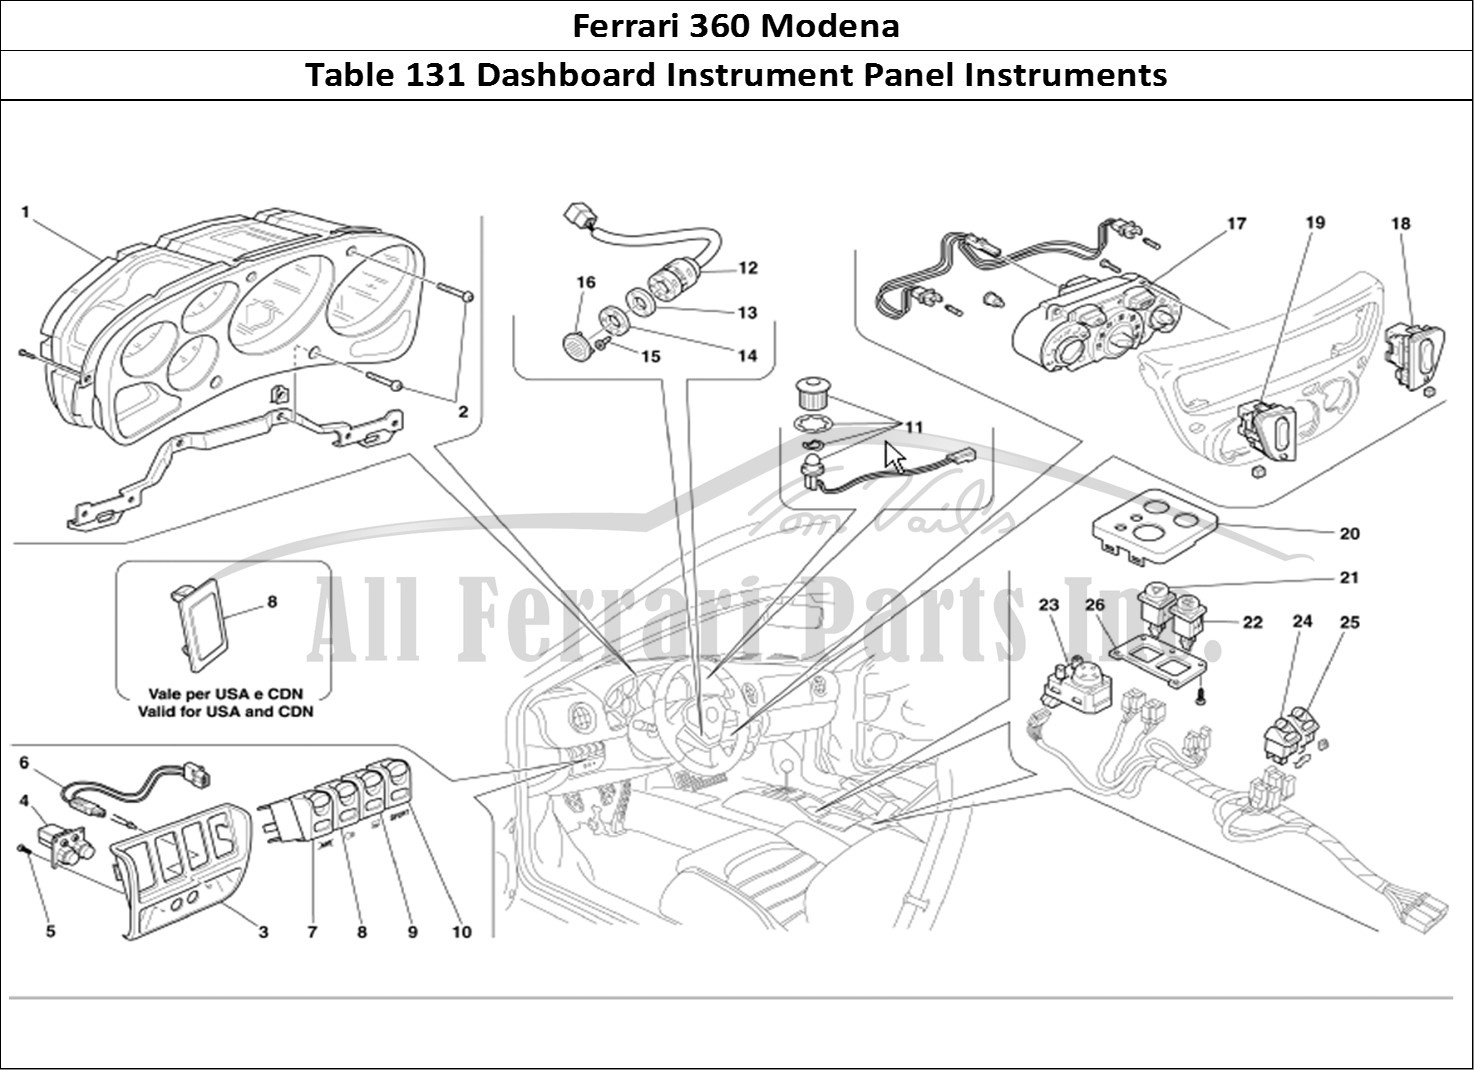 Ferrari Parts Ferrari 360 Modena Page 131 Dashboard Instruments